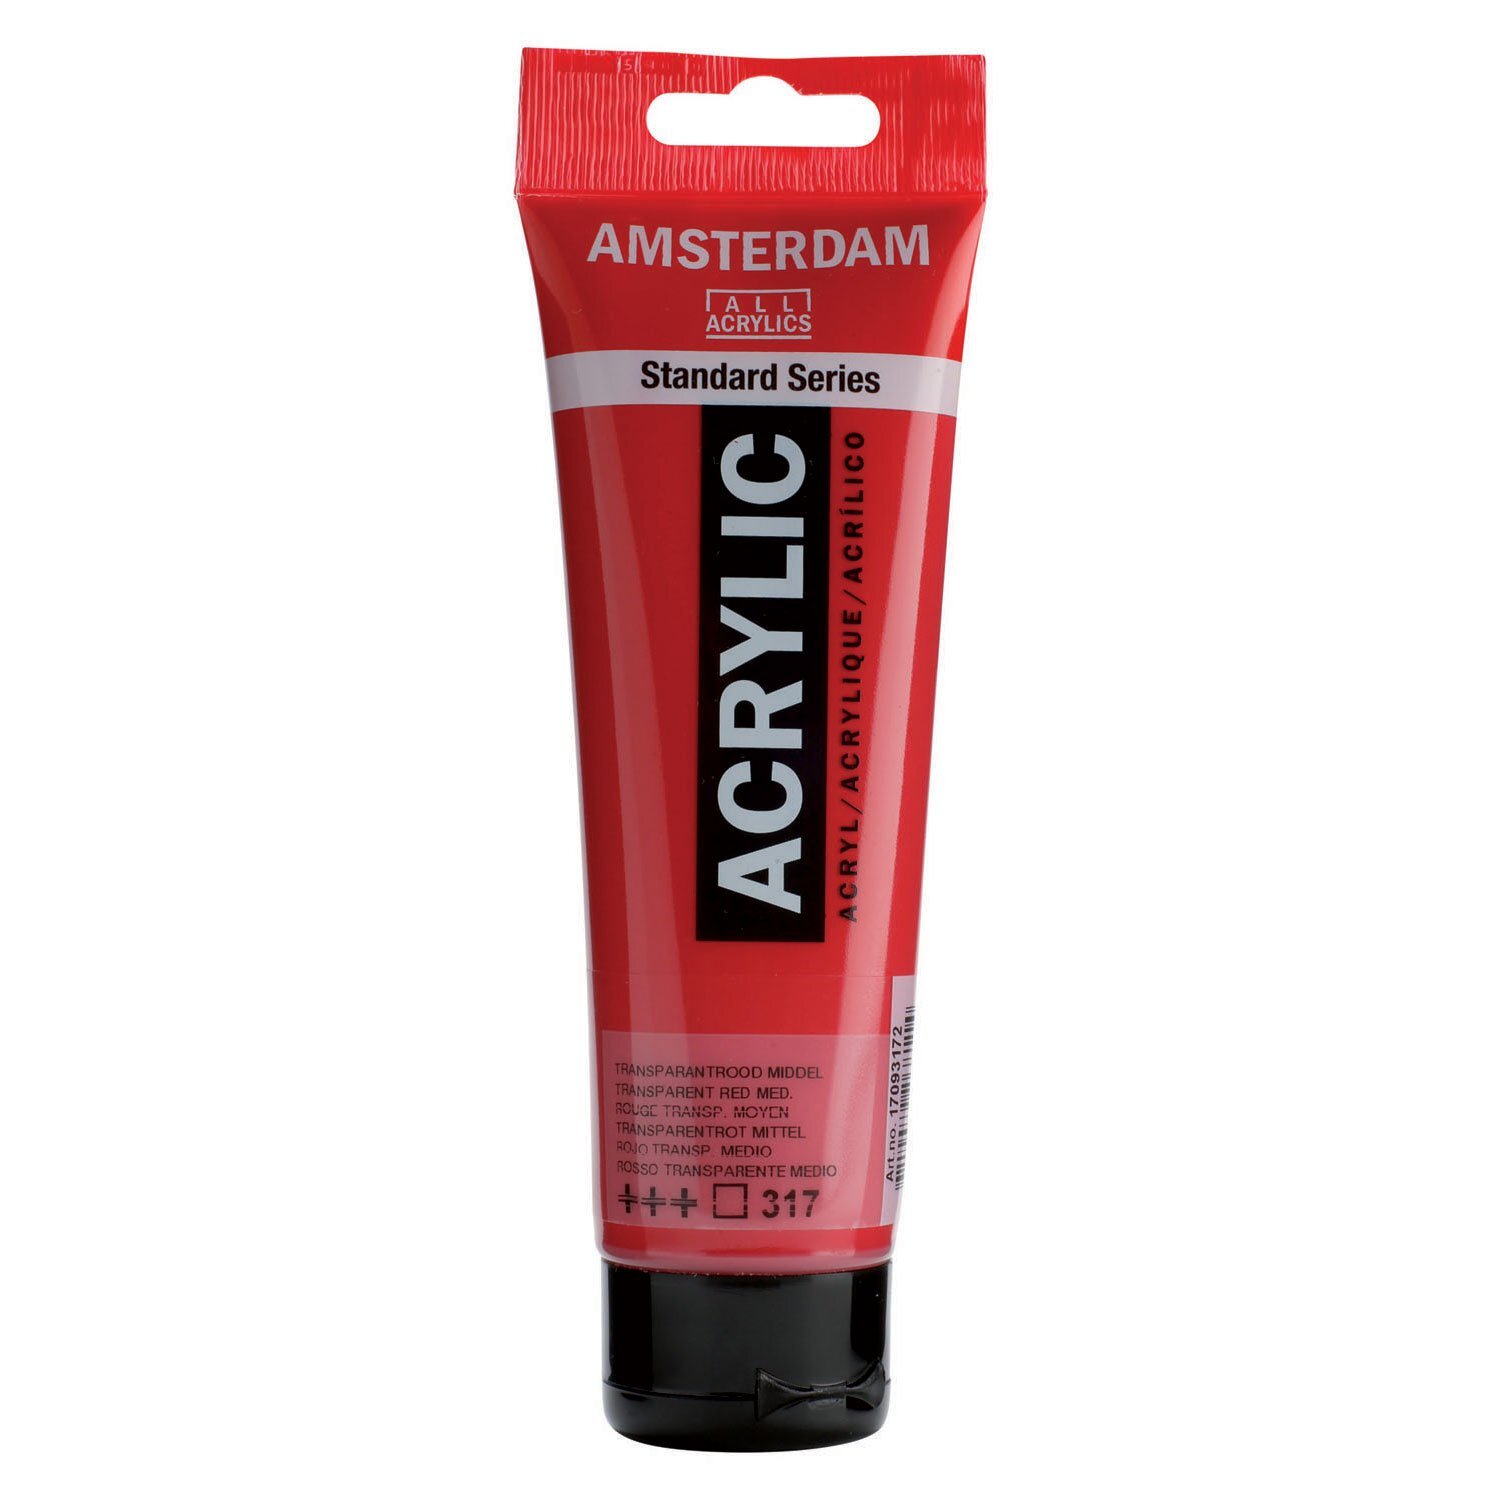 Amsterdam Standard tube 120 ml Transparantrood middel transparante acrylverf transparant rood middel